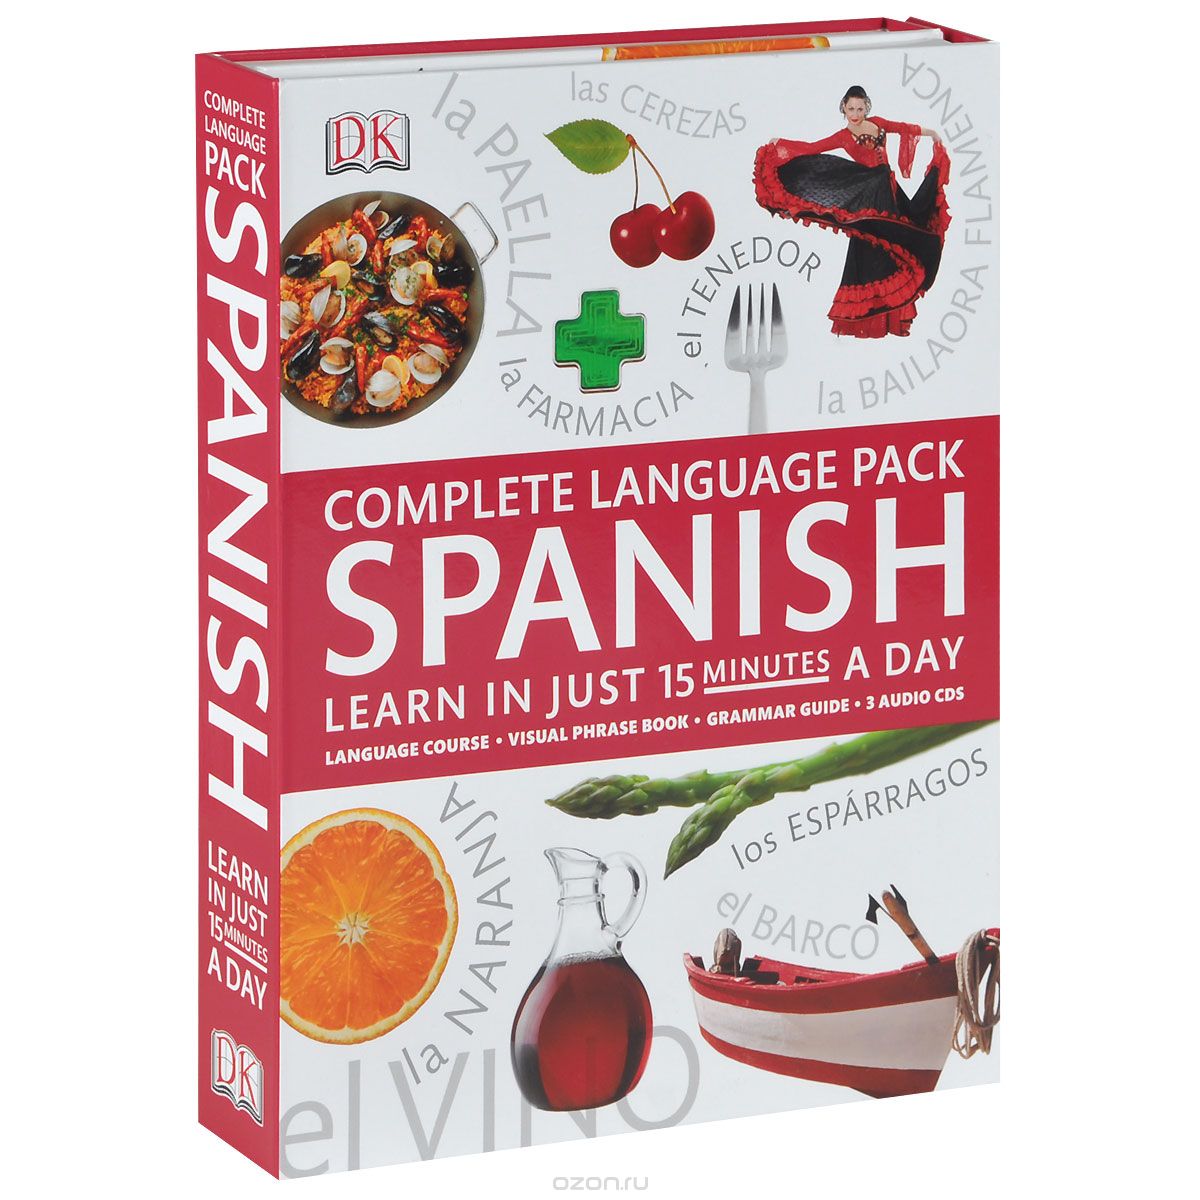 Скачать книгу "Complete Language Pack Spanish (комплект из 3 книг + 3 CD)"